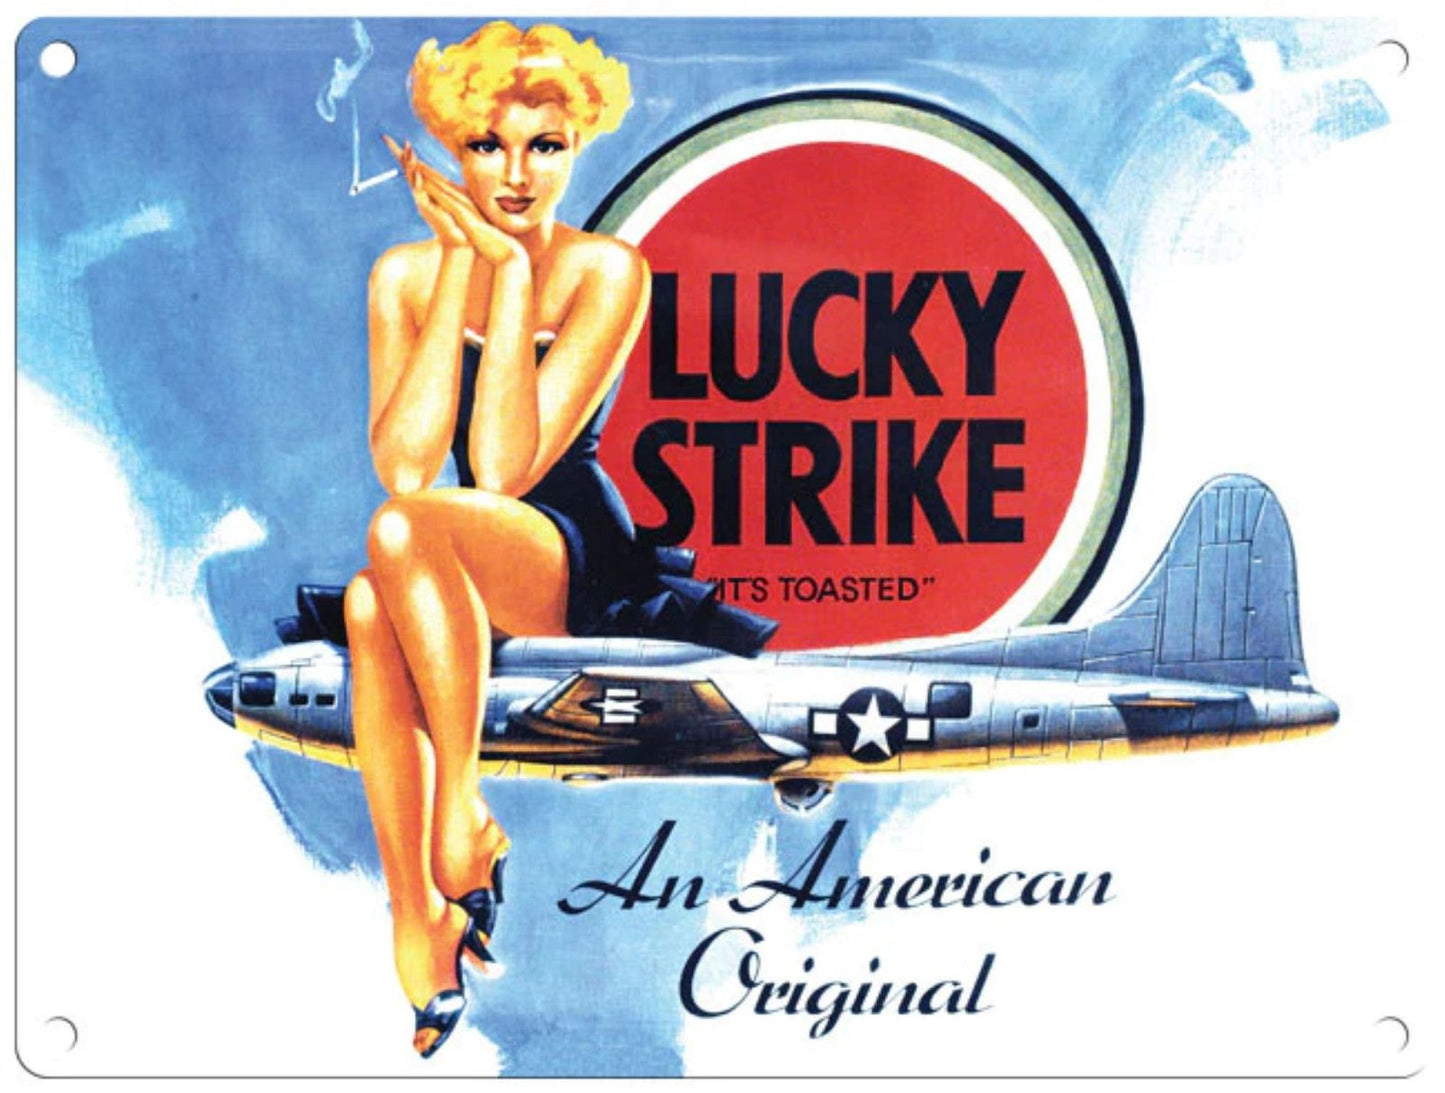 Small Metal Sign 45 x 37.5cm Vintage Retro Lucky Strike Cigarettes